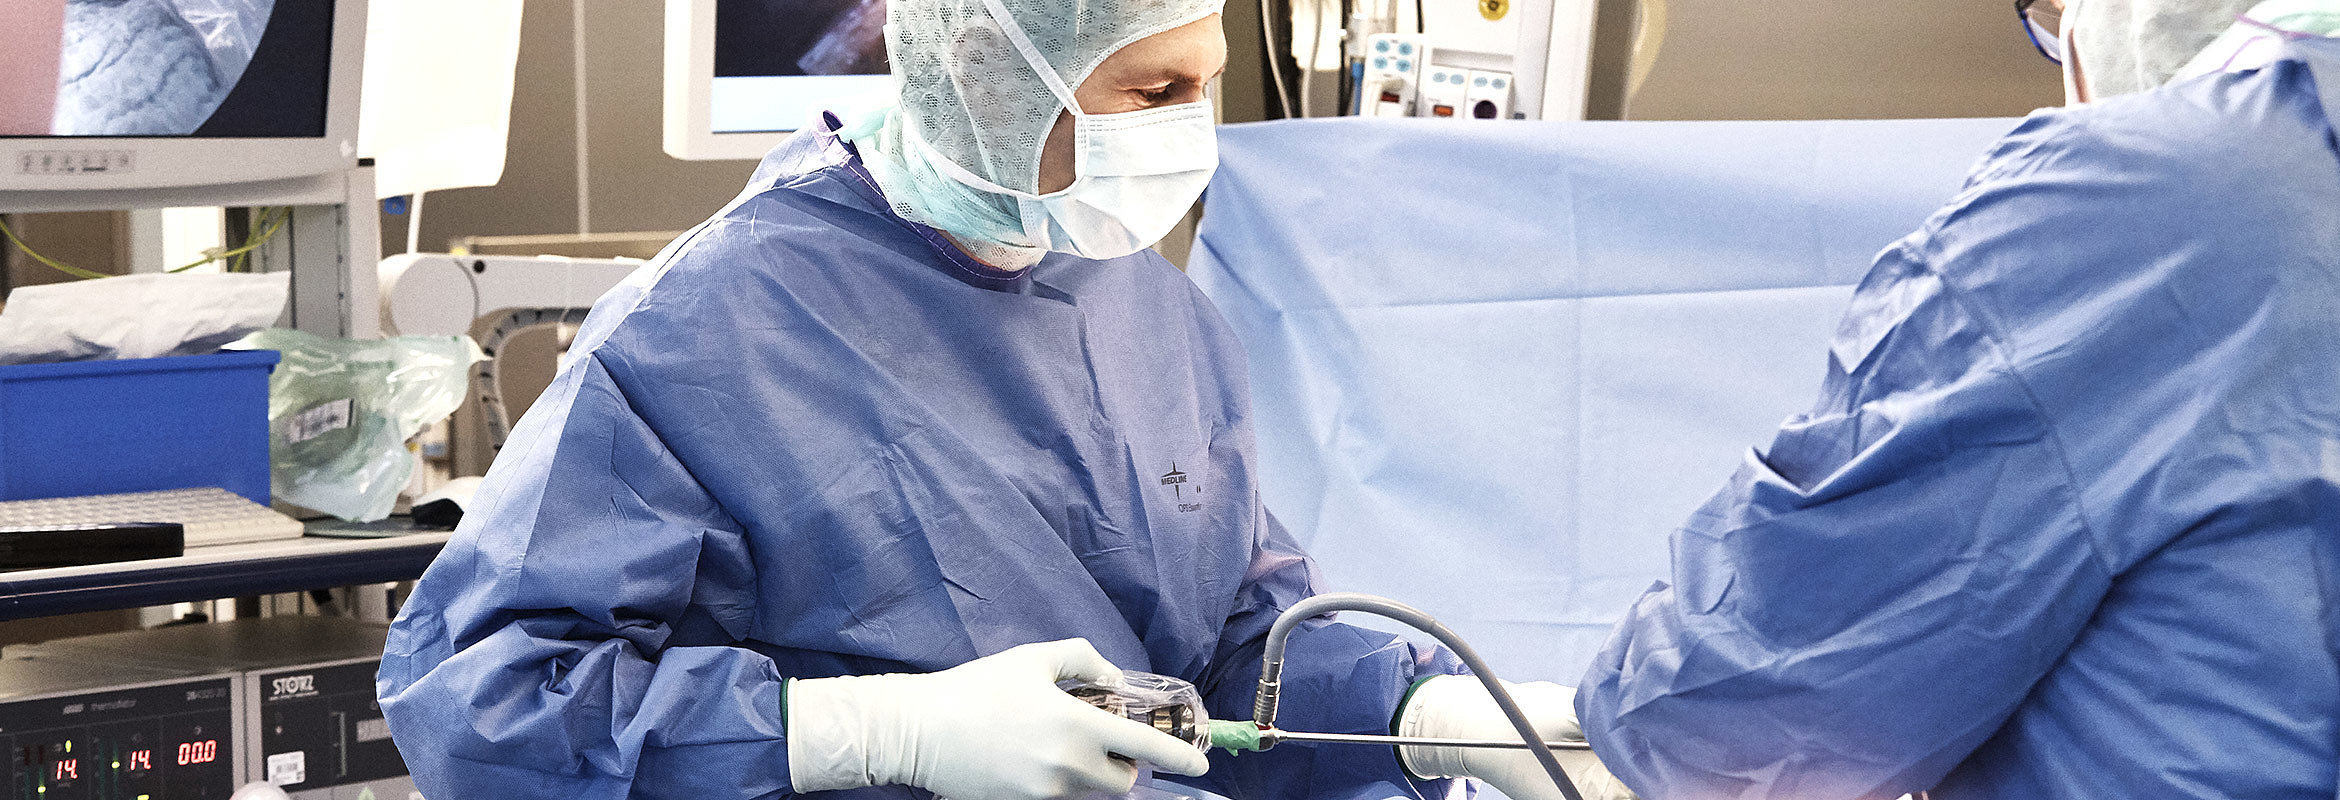 Hernienoperation im OP des Westpfalz-Klinikums Kusel